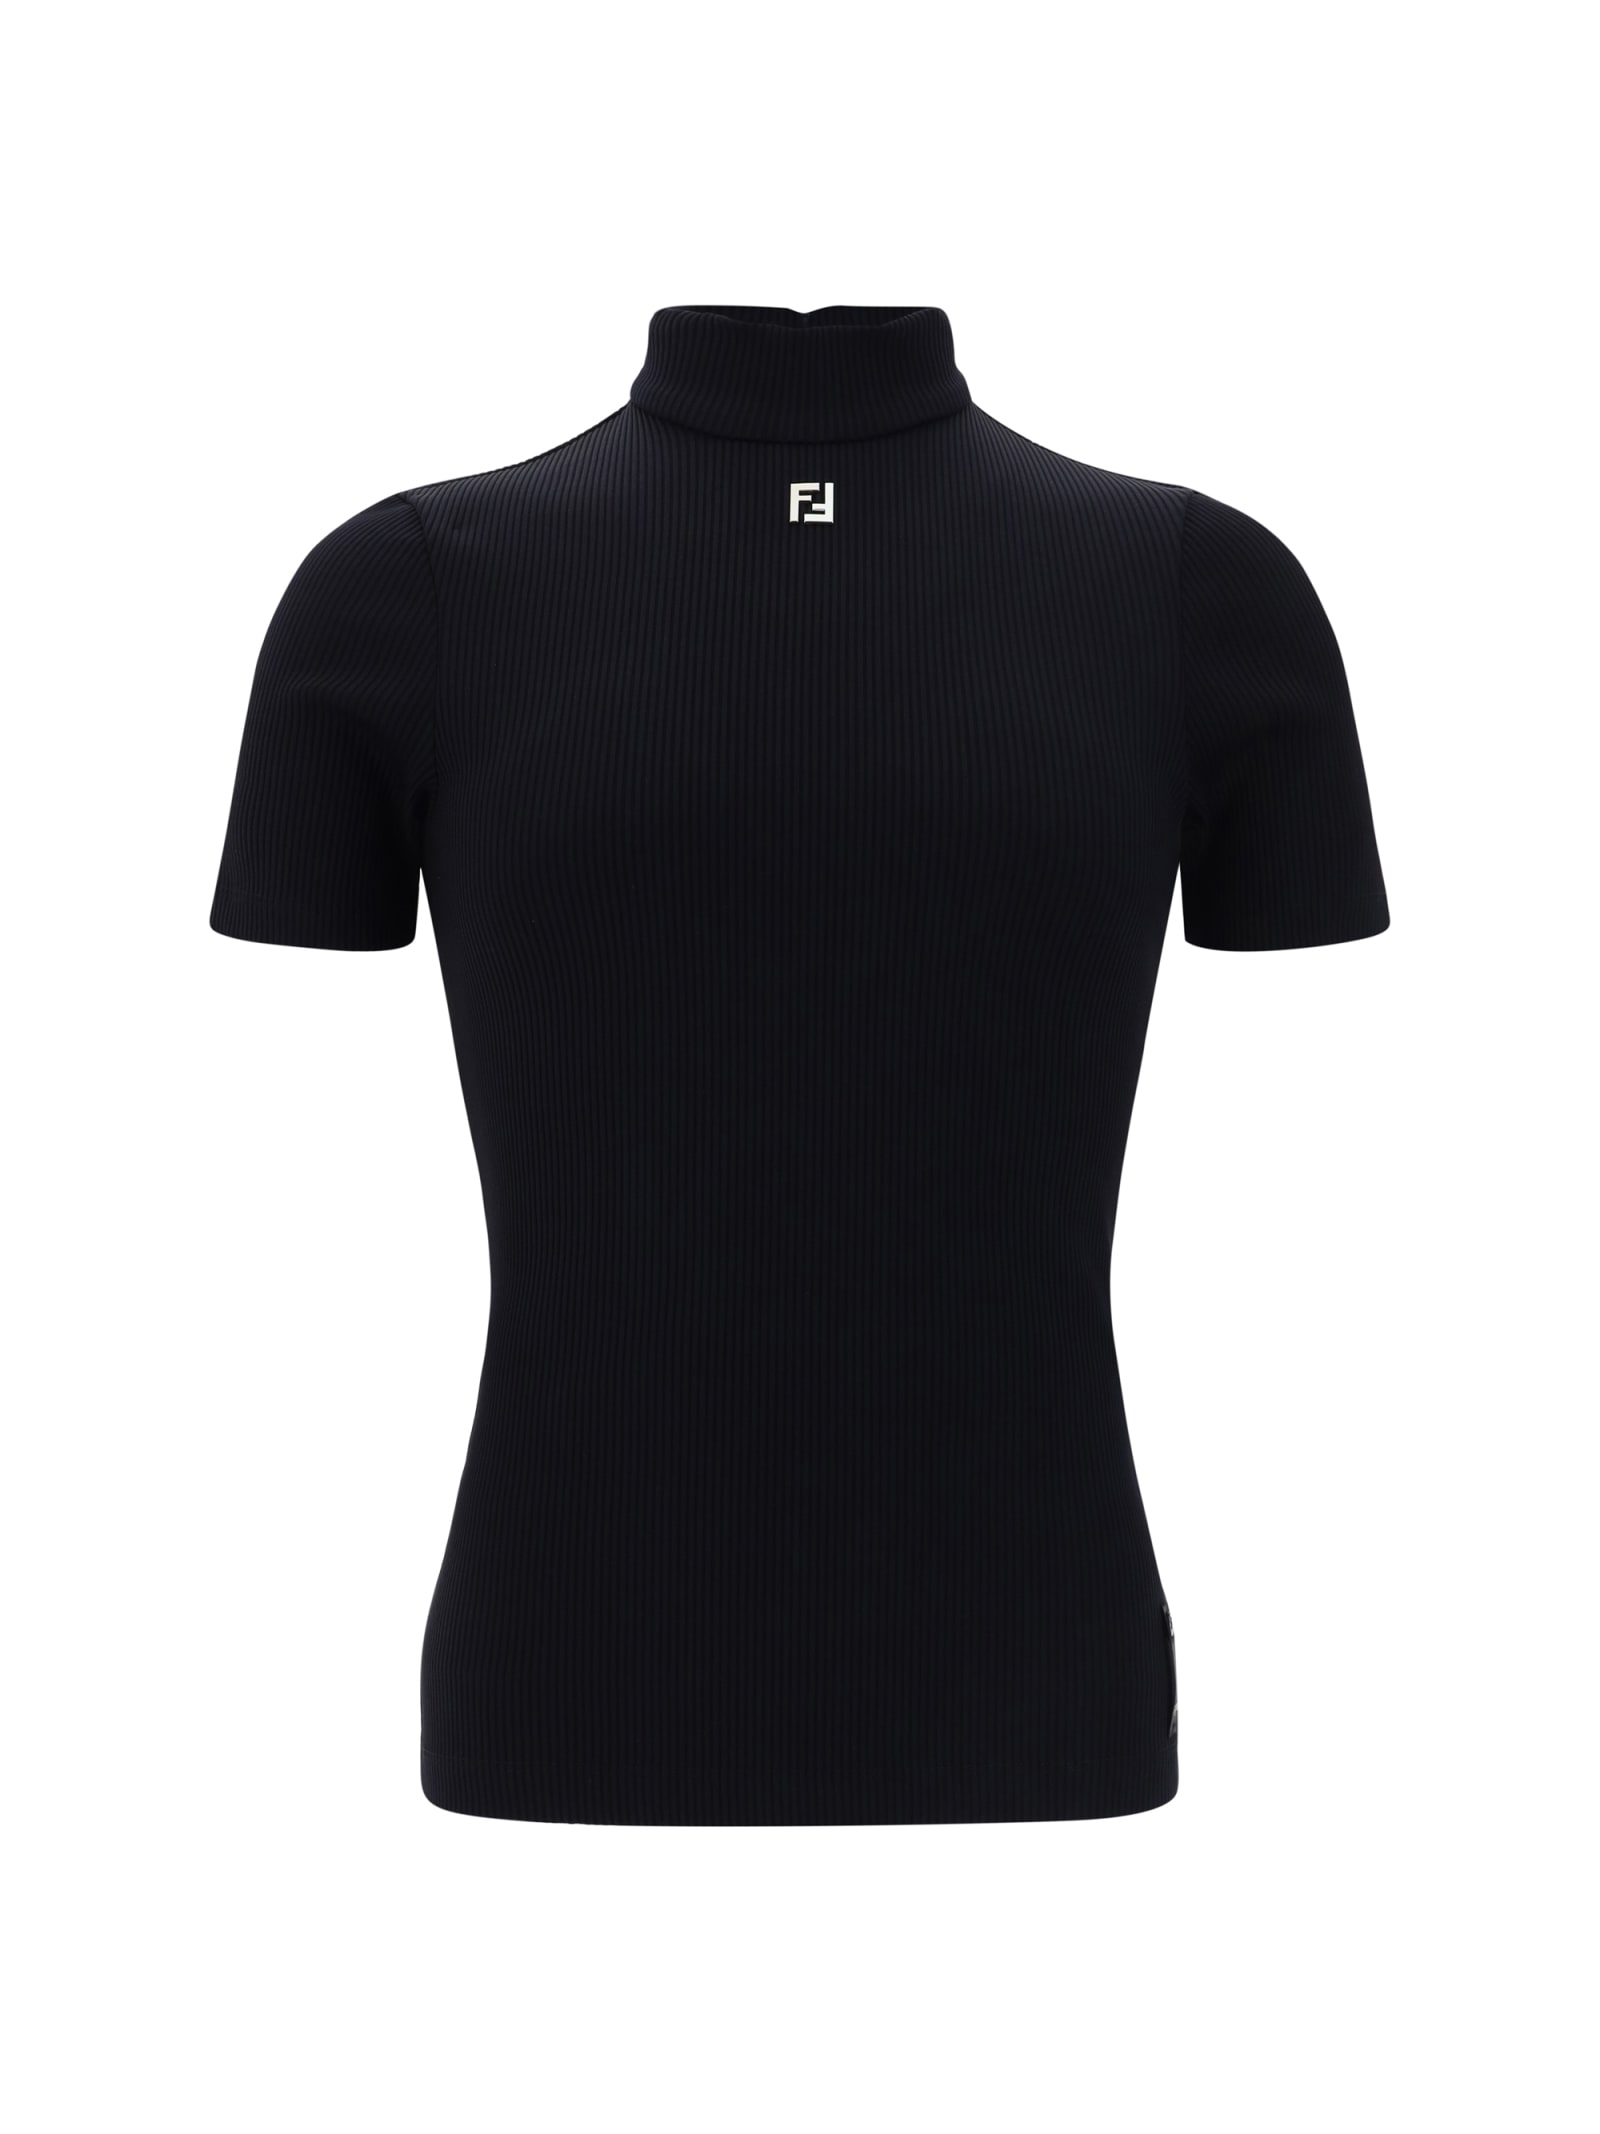 Shop Fendi T-shirt In Black